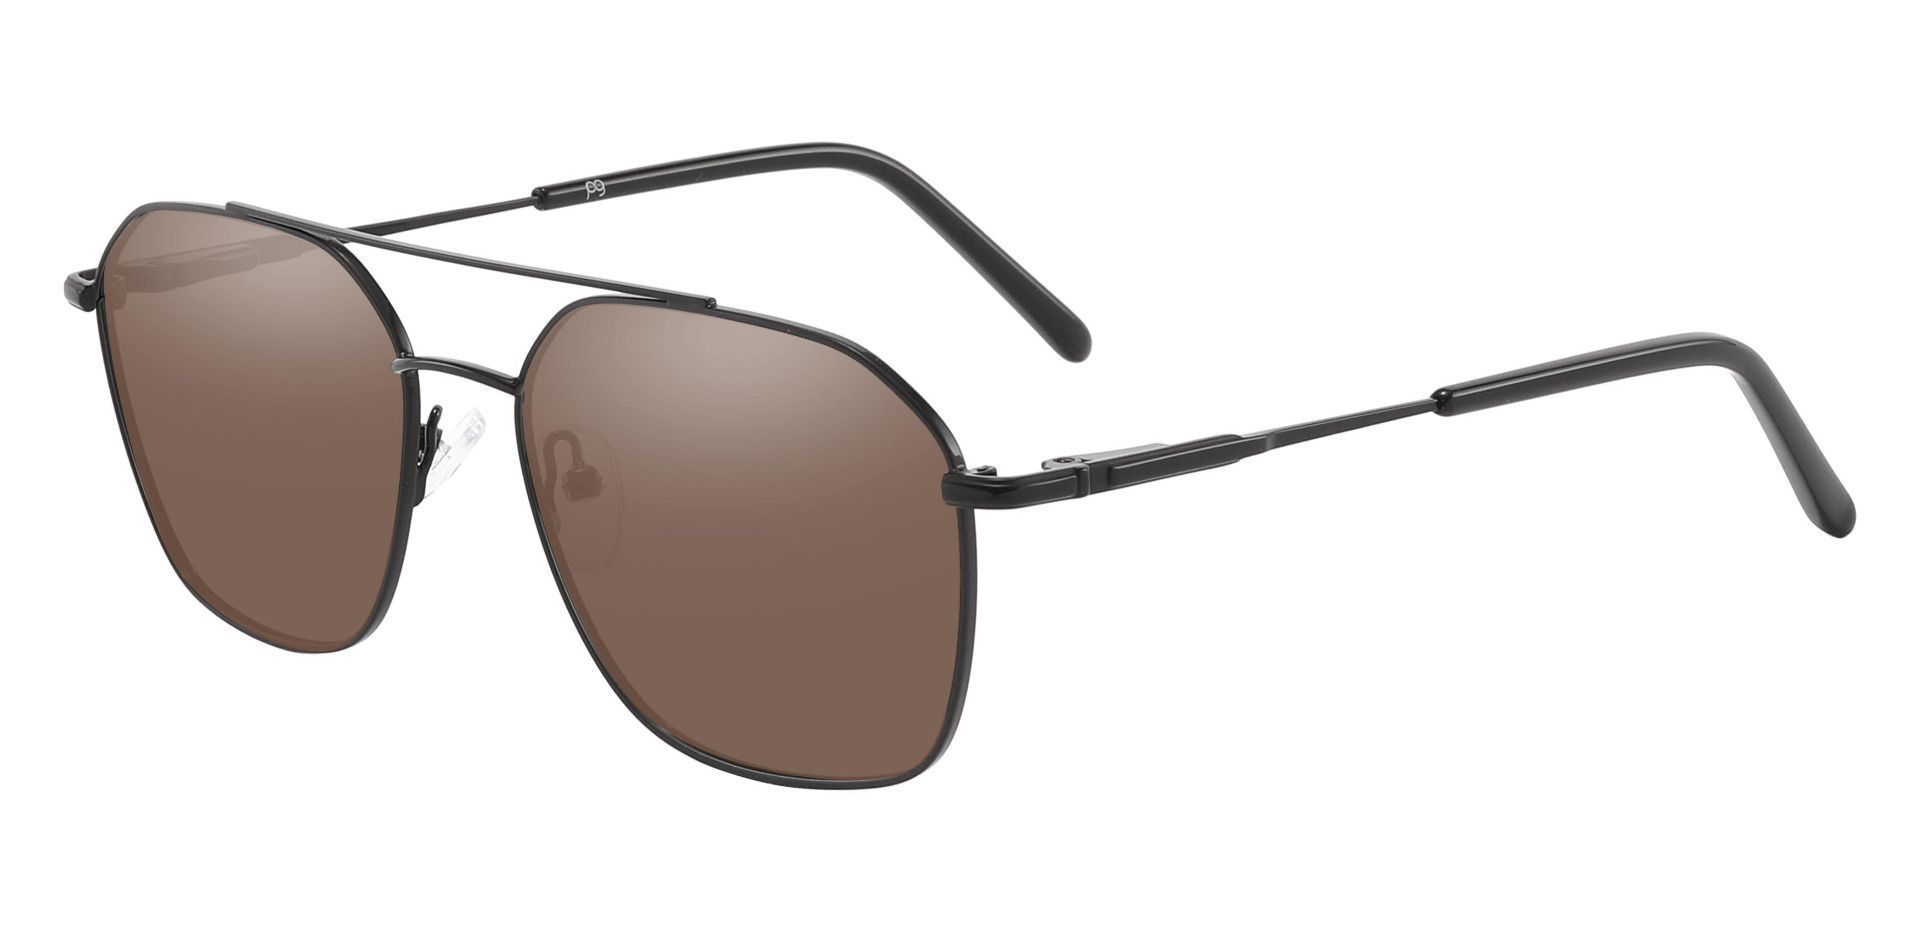 Harvey Aviator Non-Rx Sunglasses - Black Frame With Brown Lenses